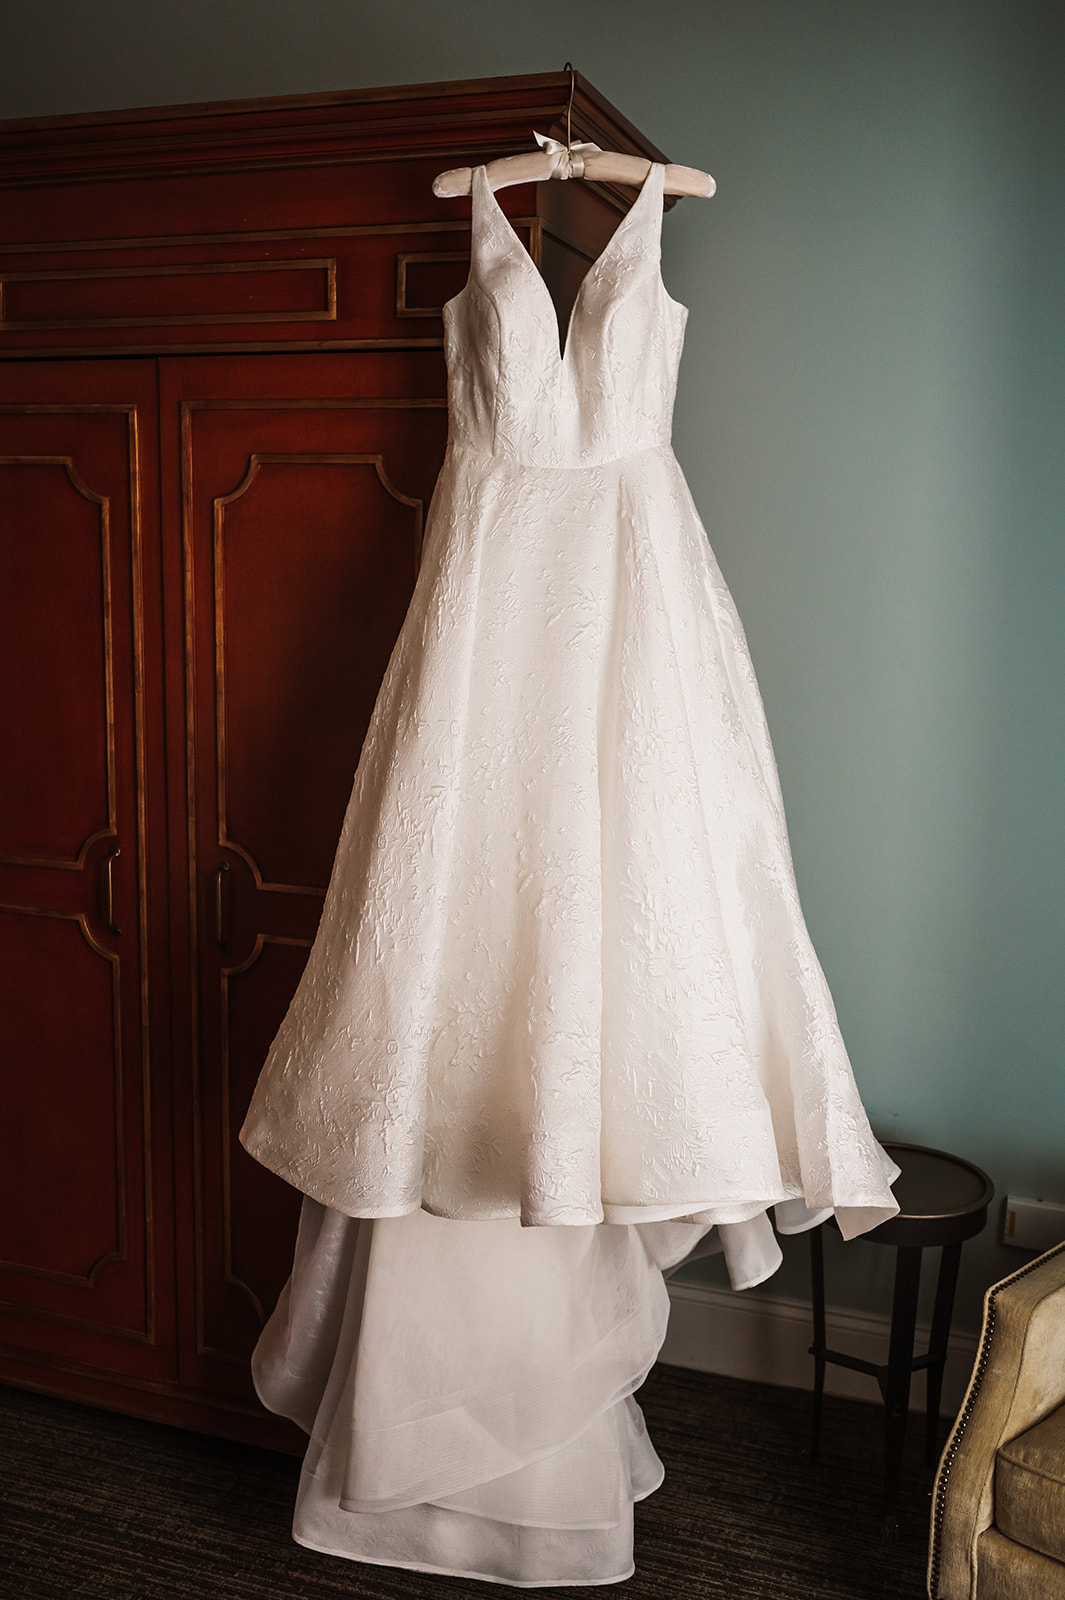 Blackstone Chicago Wedding Photography - hanging dress